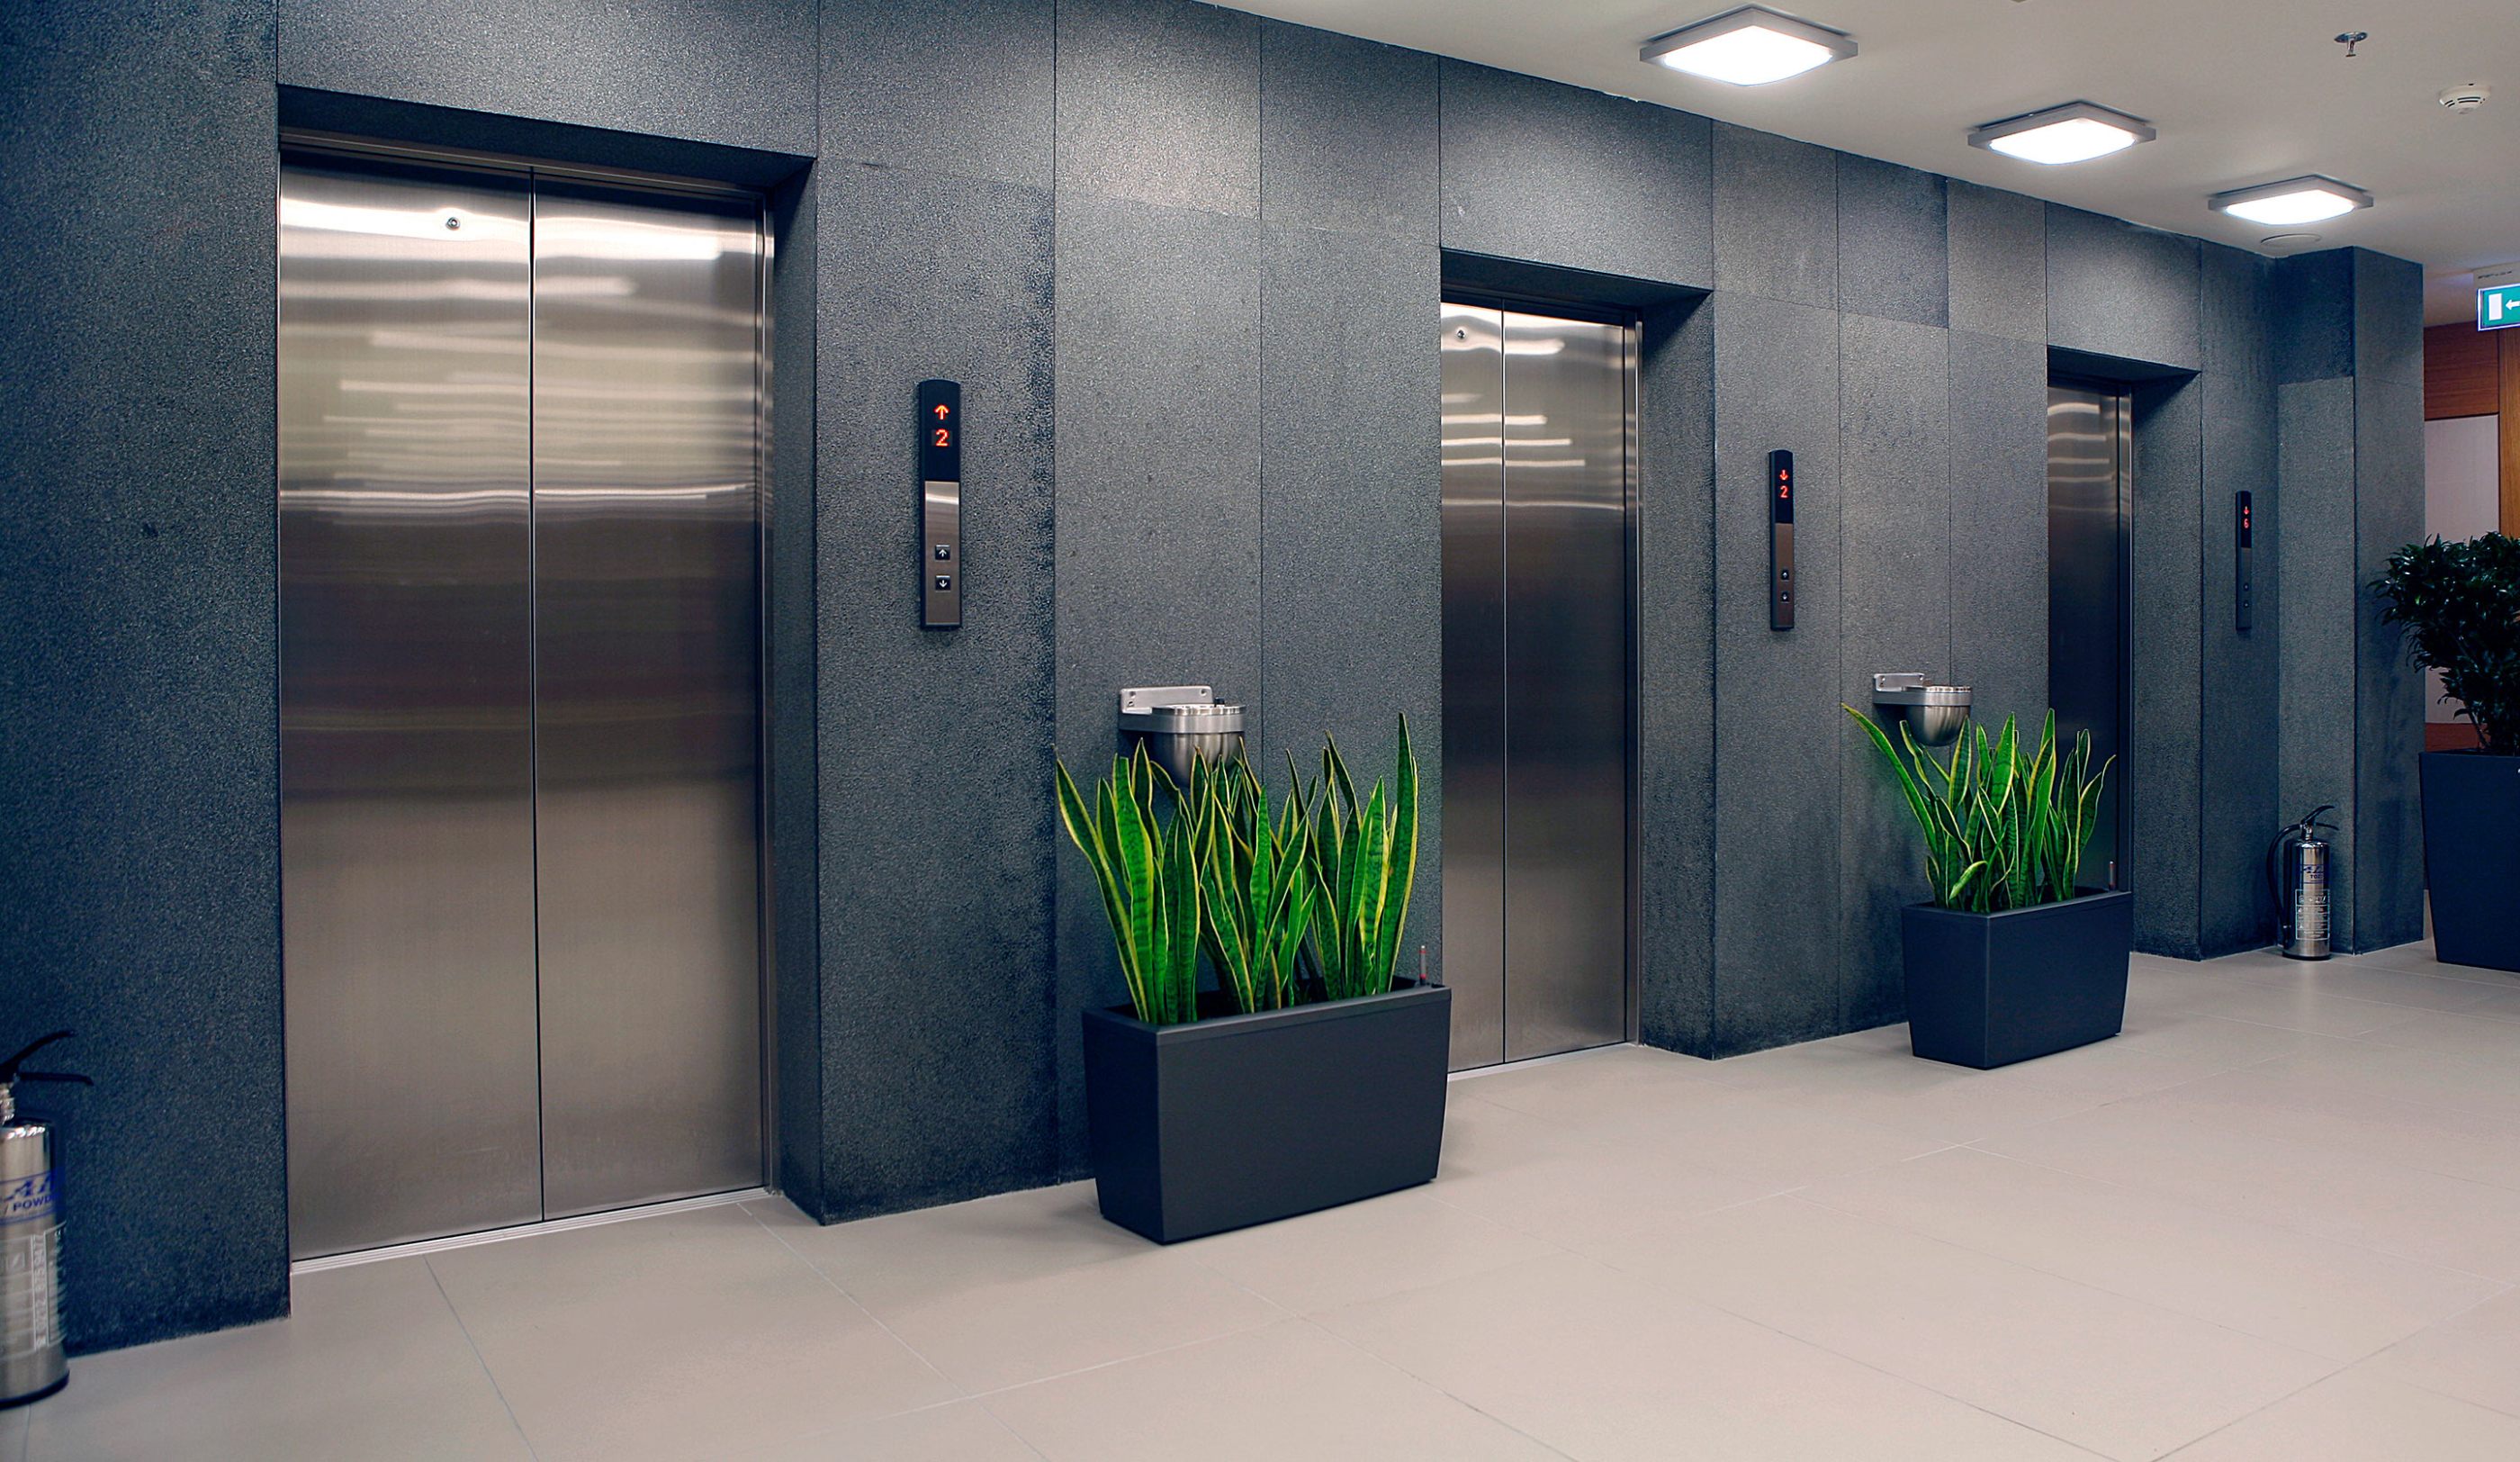 Elevator doors in a lobby